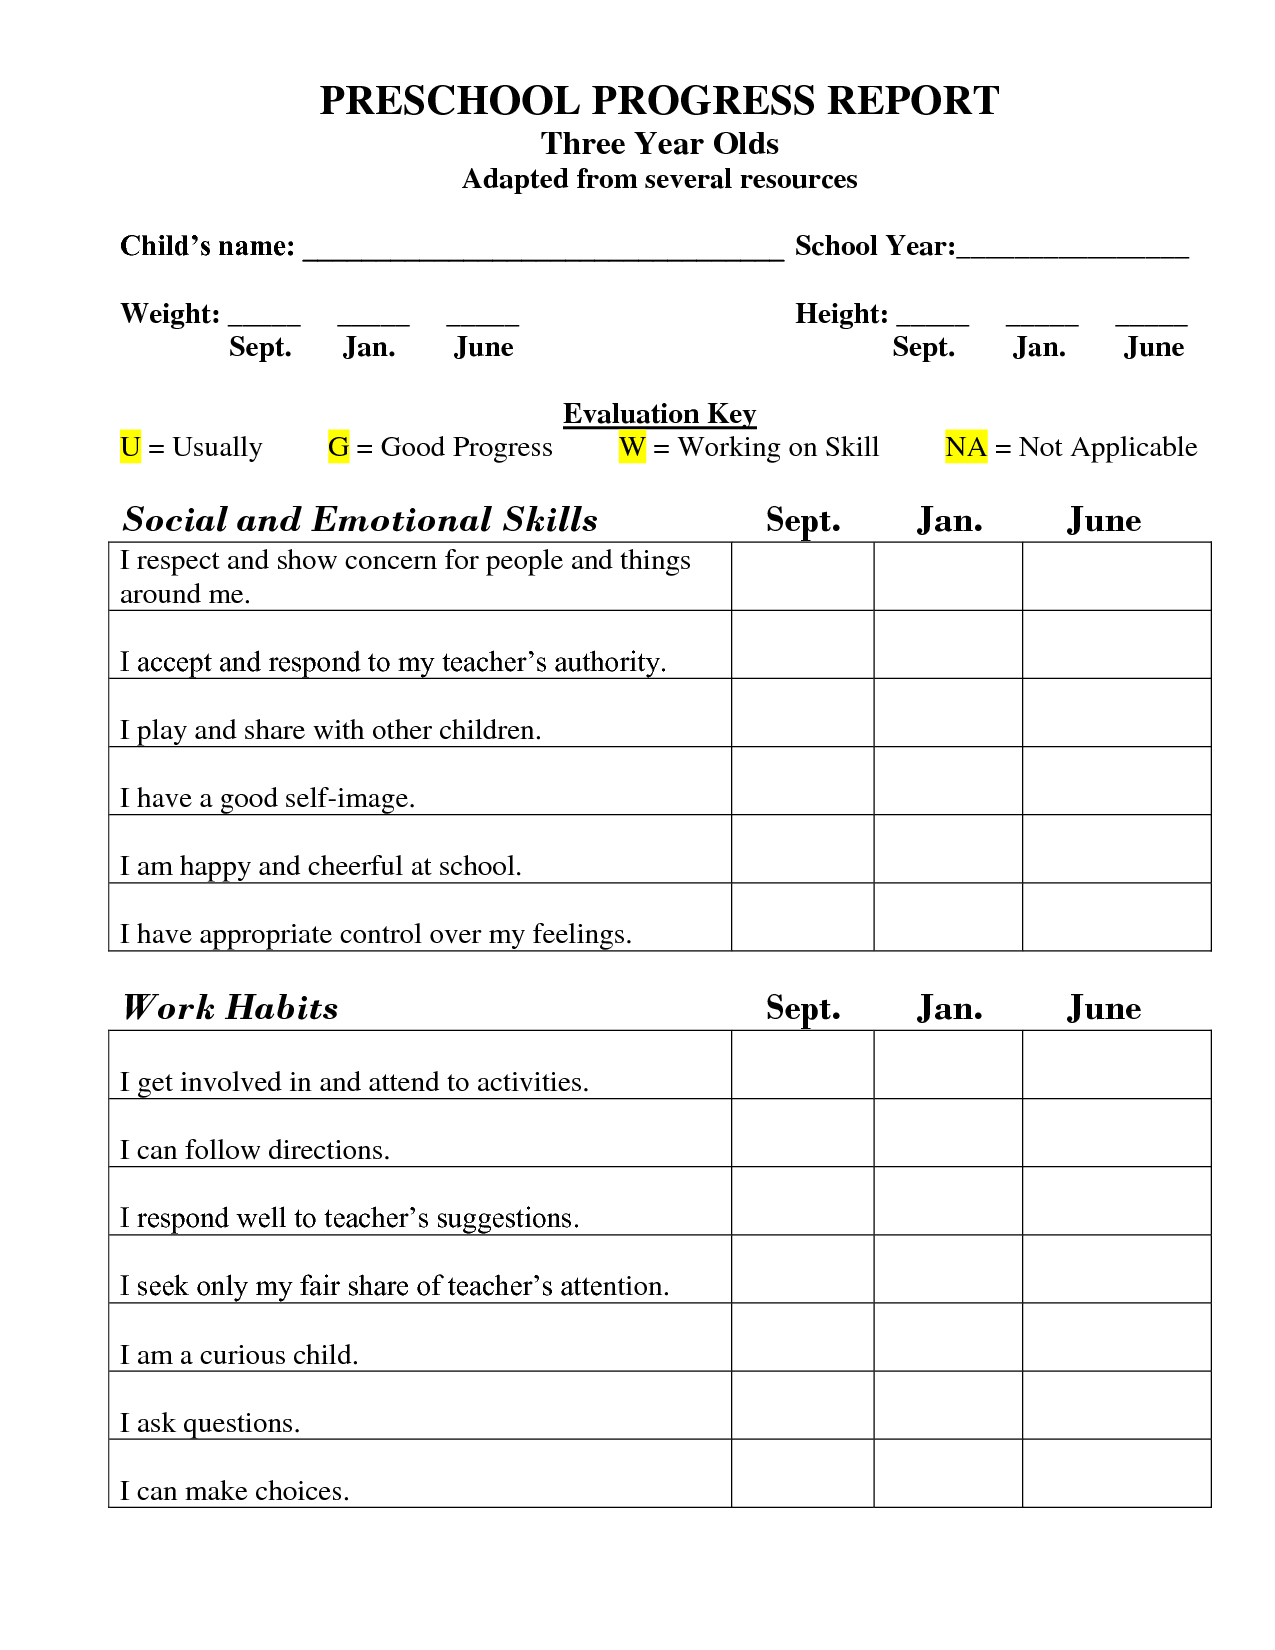 Printable Preschool Progress Report Template  Kg  Preschool pertaining to Preschool Progress Report Template